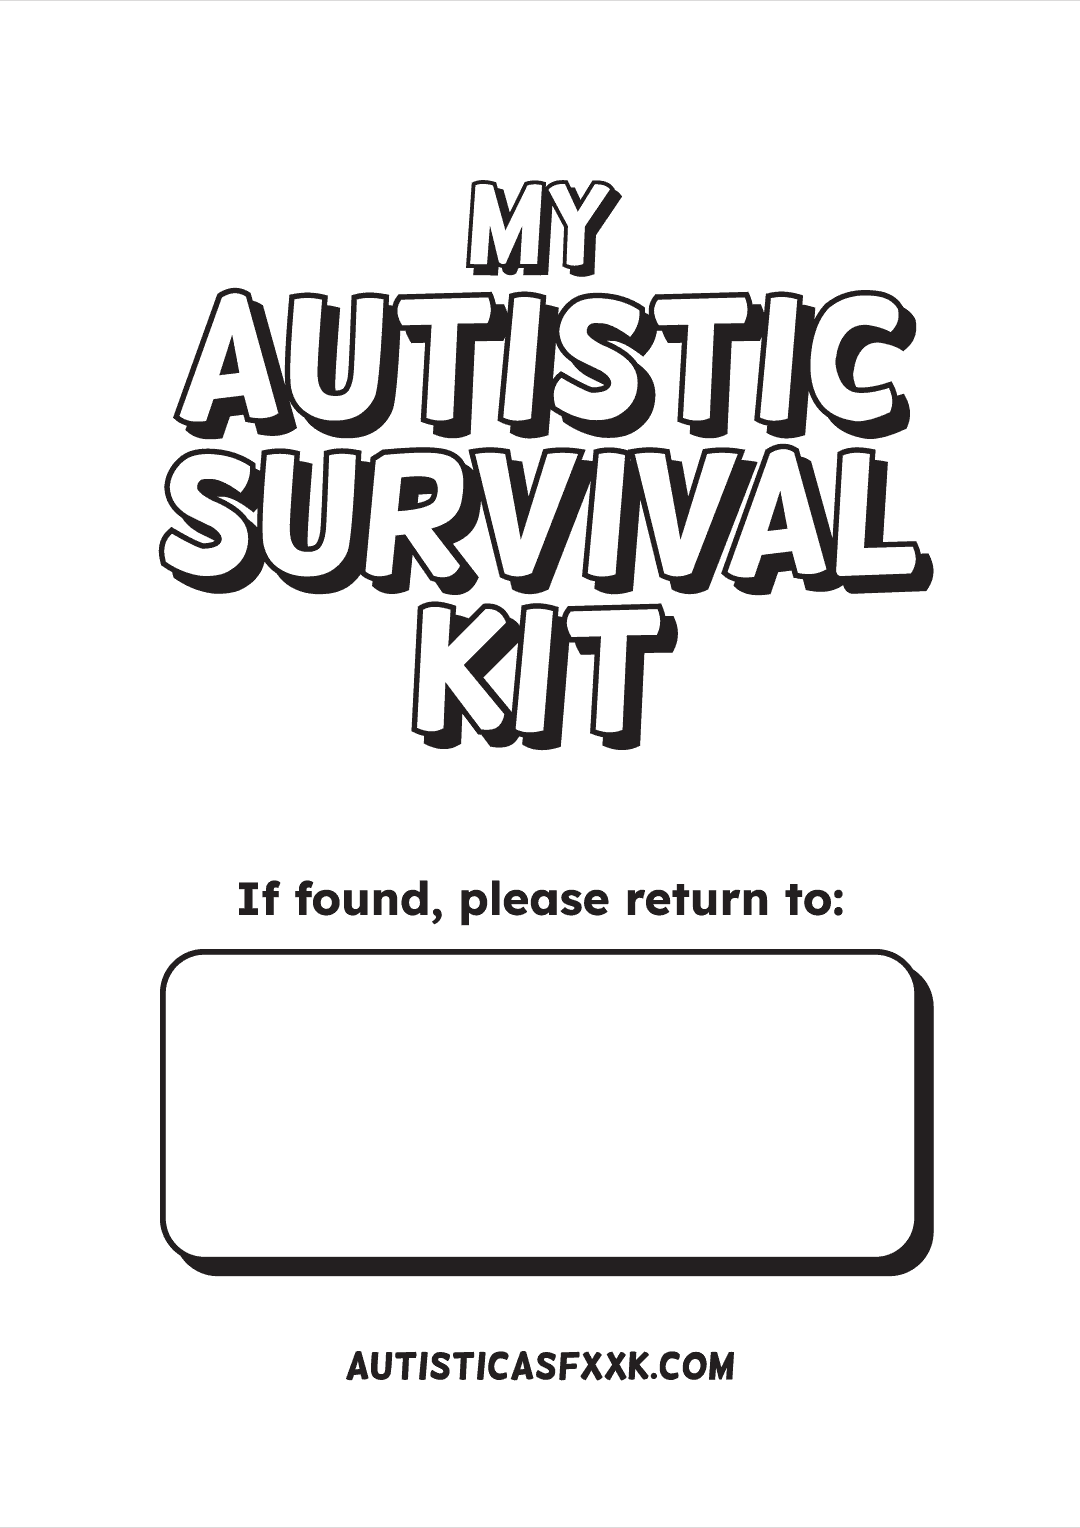 Cover of My Autistic Survival Kit mini-zine